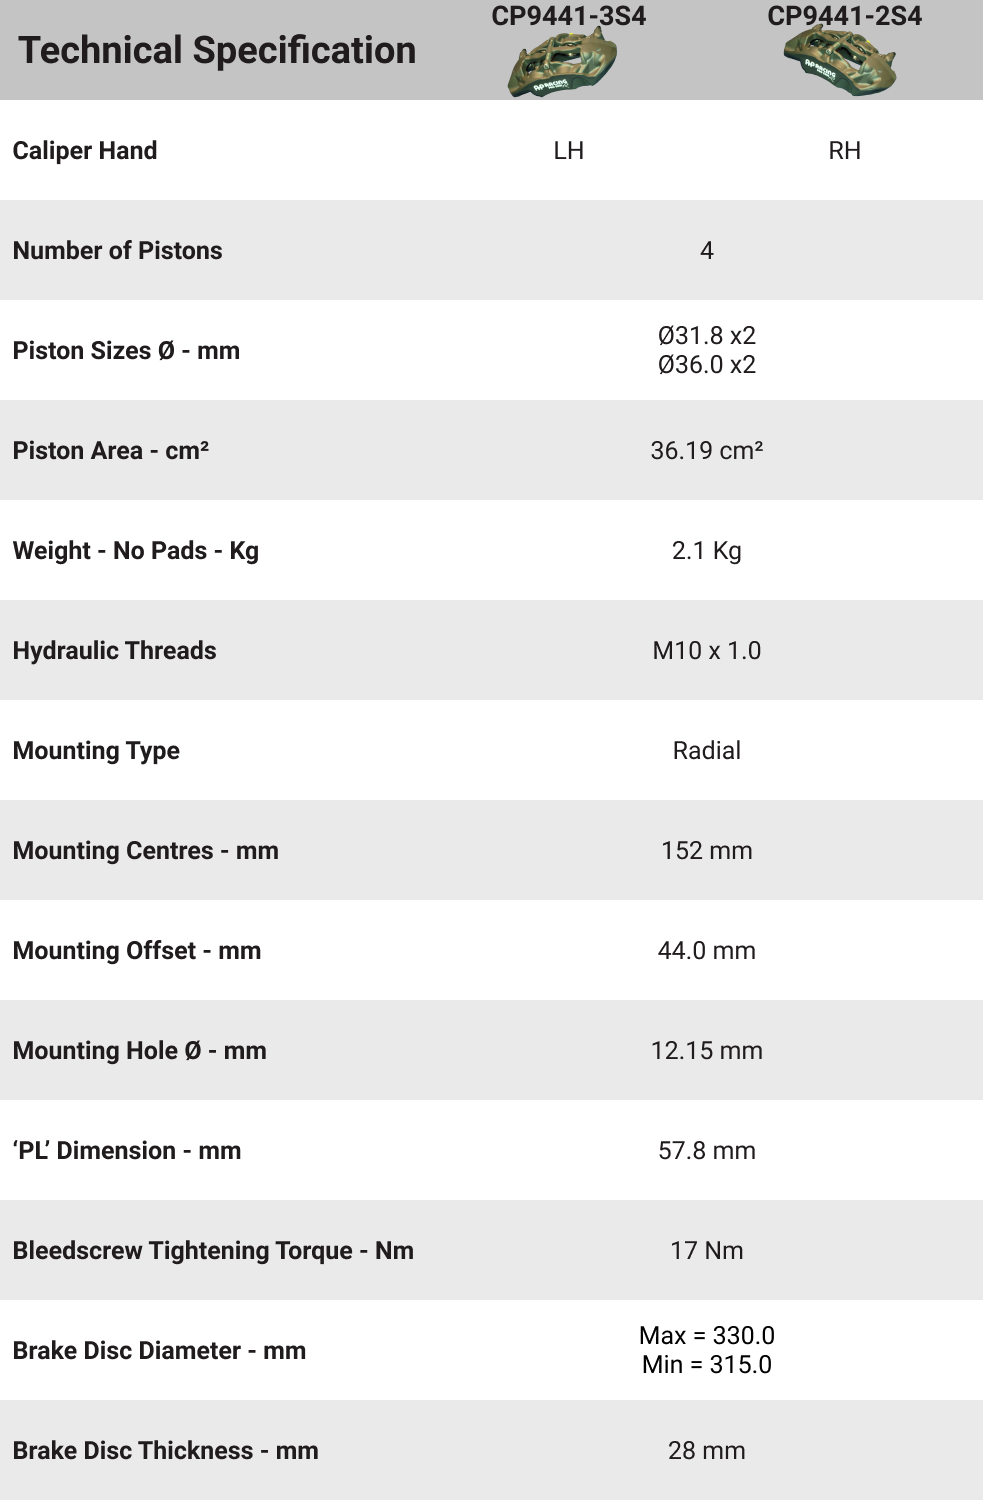 CP9441 AP Racing 4 Piston Radi-CAL Caliper Technical Specification